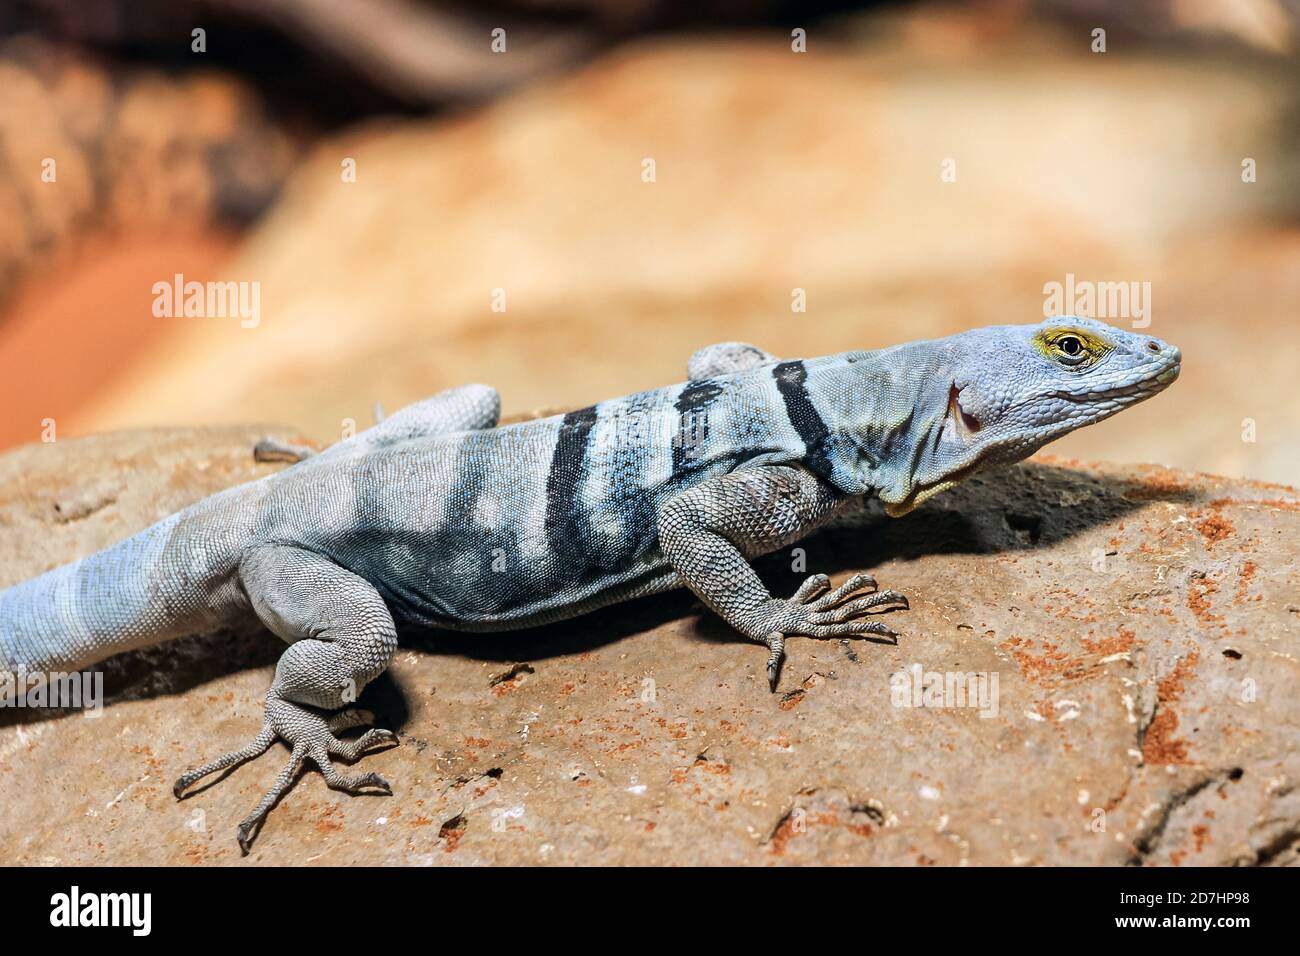 close up of a baja blue rock lizard on stone Stock Photo